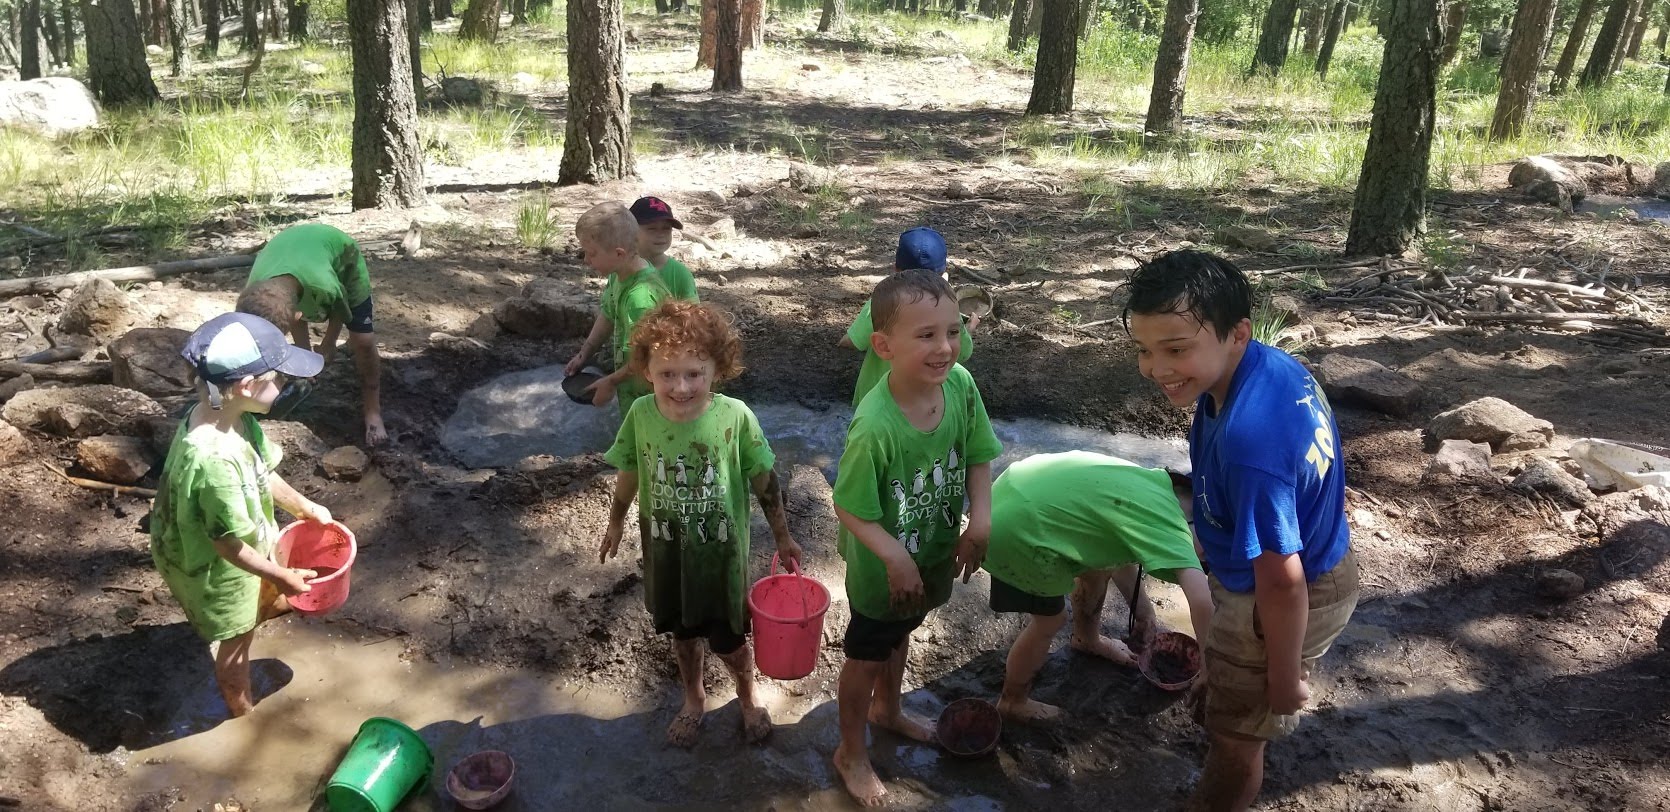 Summer campers kindergarten mud-kitchen fun in the mud outdoors together